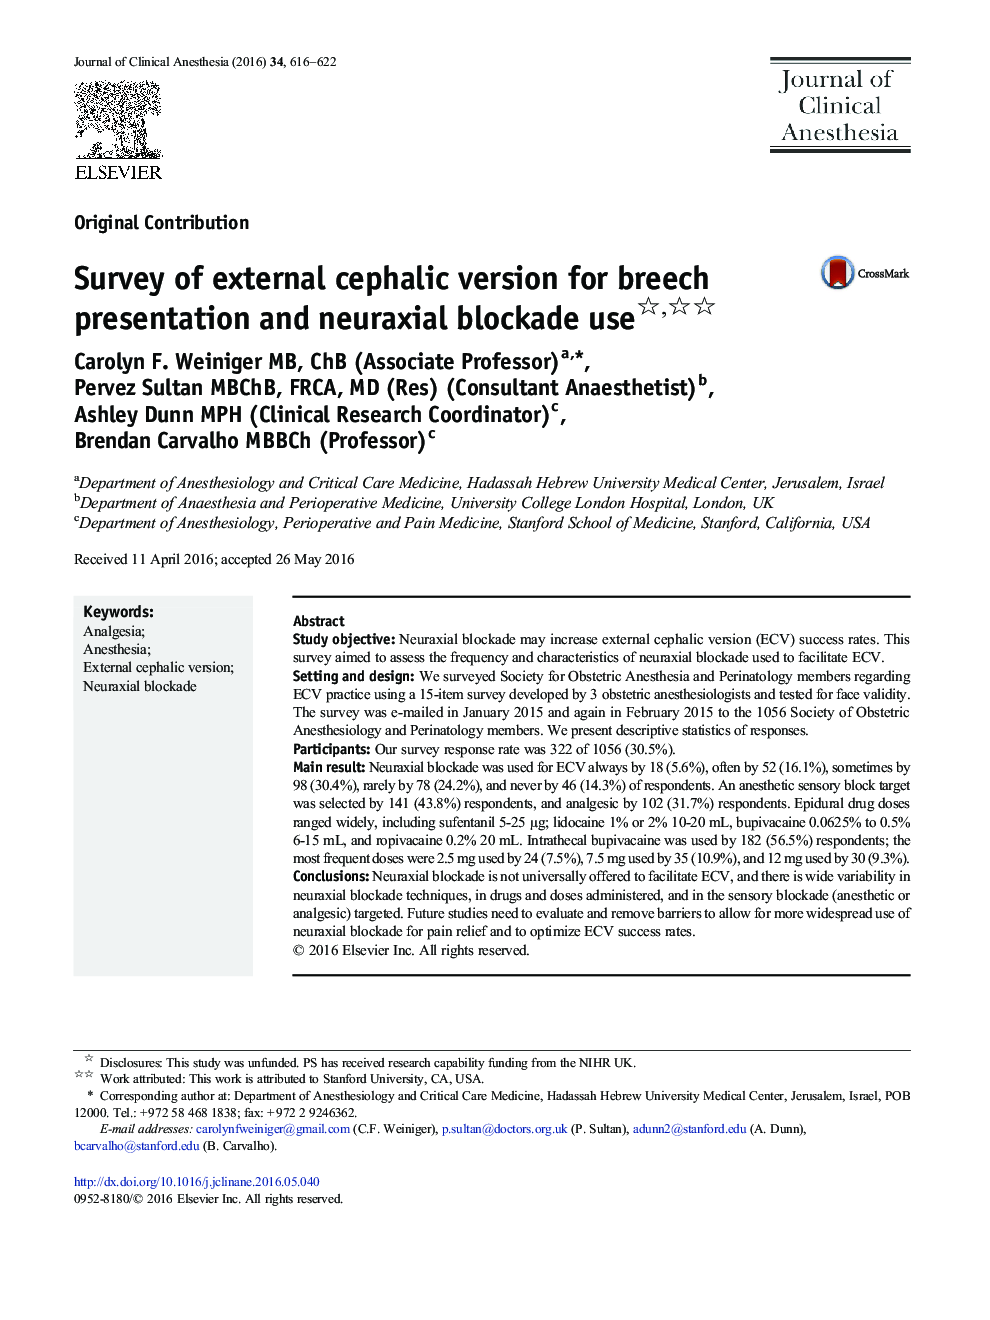 Survey of external cephalic version for breech presentation and neuraxial blockade use